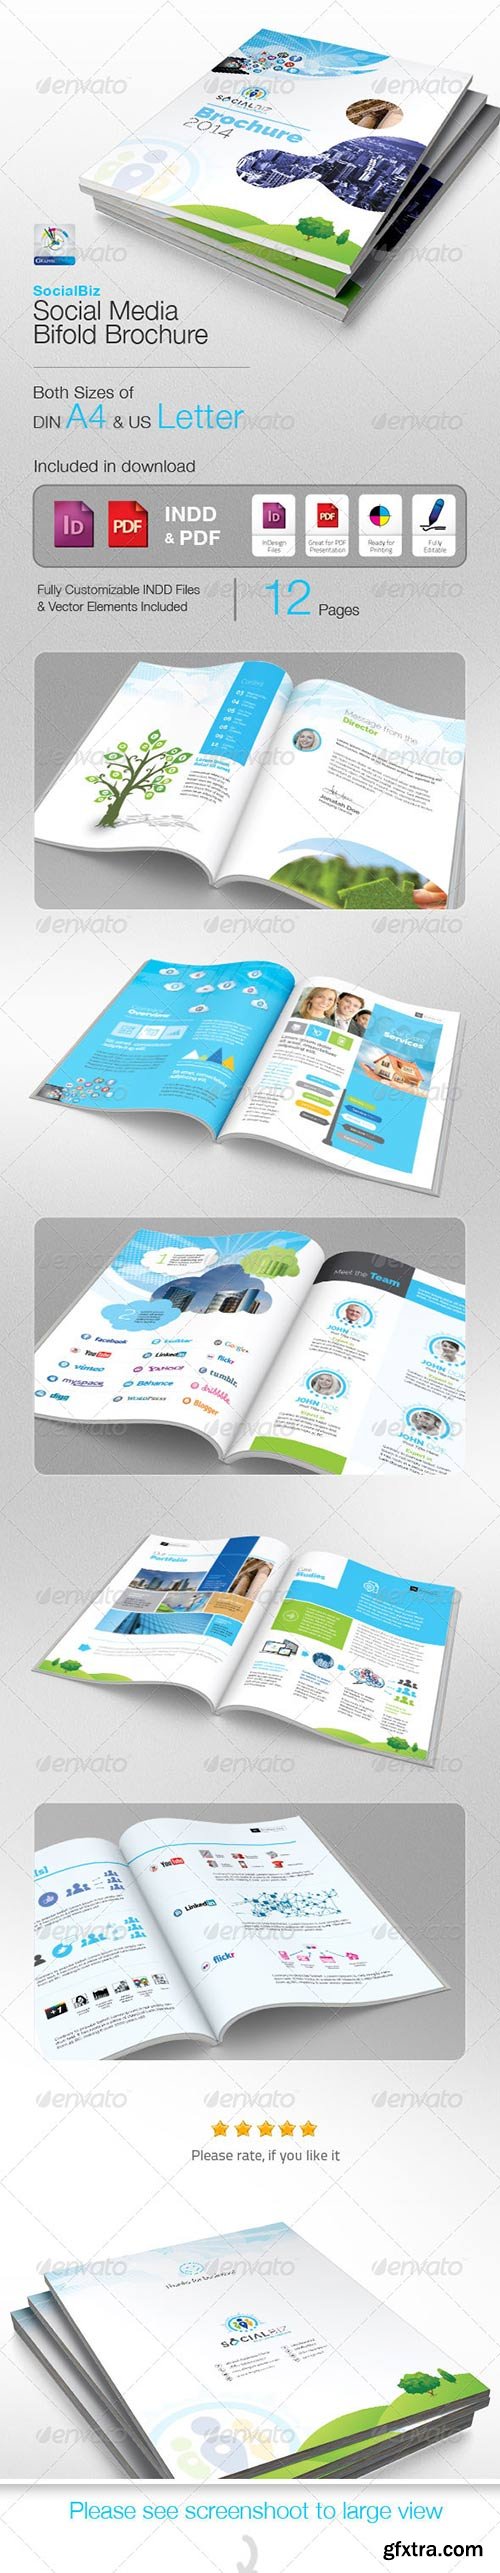 Graphicriver - SocialBiz Professional Social Media Brochure 5747201